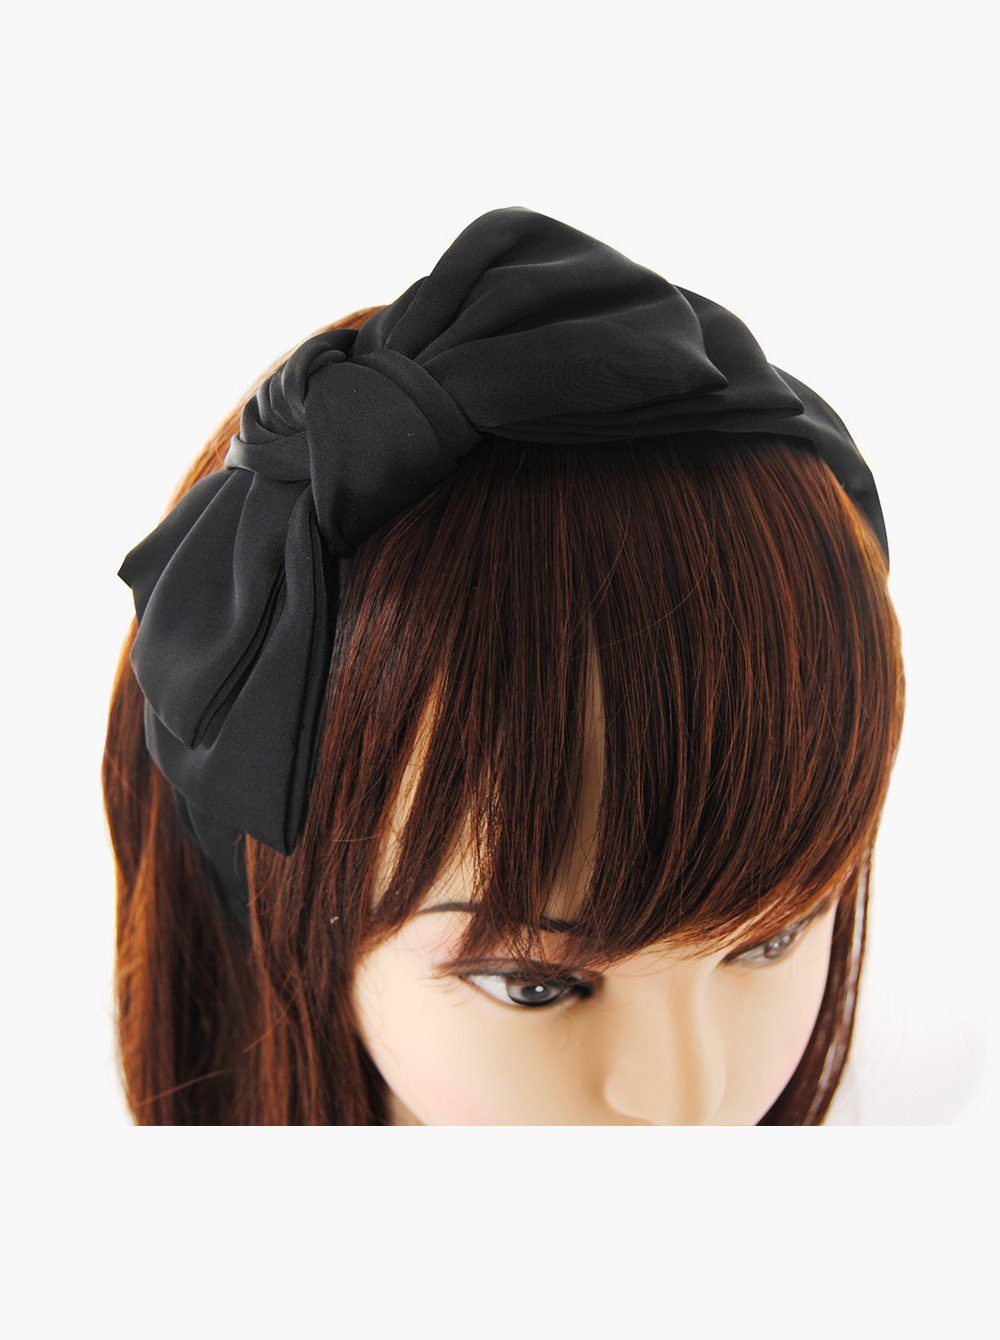 Haarband mit Satin 7,5 Haarreif große Schwarz cm, axy Doppel aus x 16 Vintage Haarreif cm Haareifen Damen Schleife